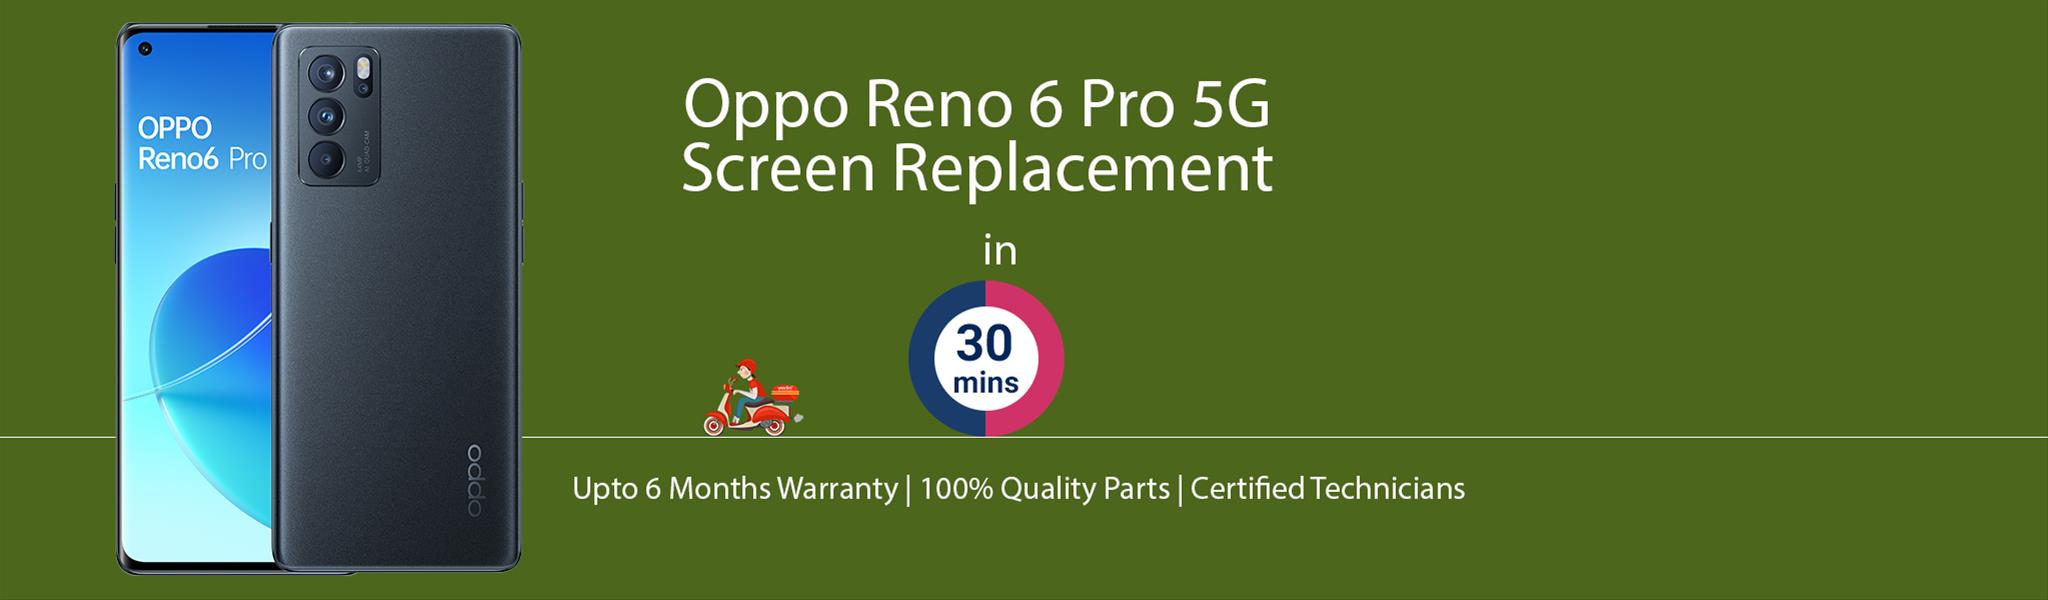 oppo-reno-6-pro-5g-screen-replacement.jpg